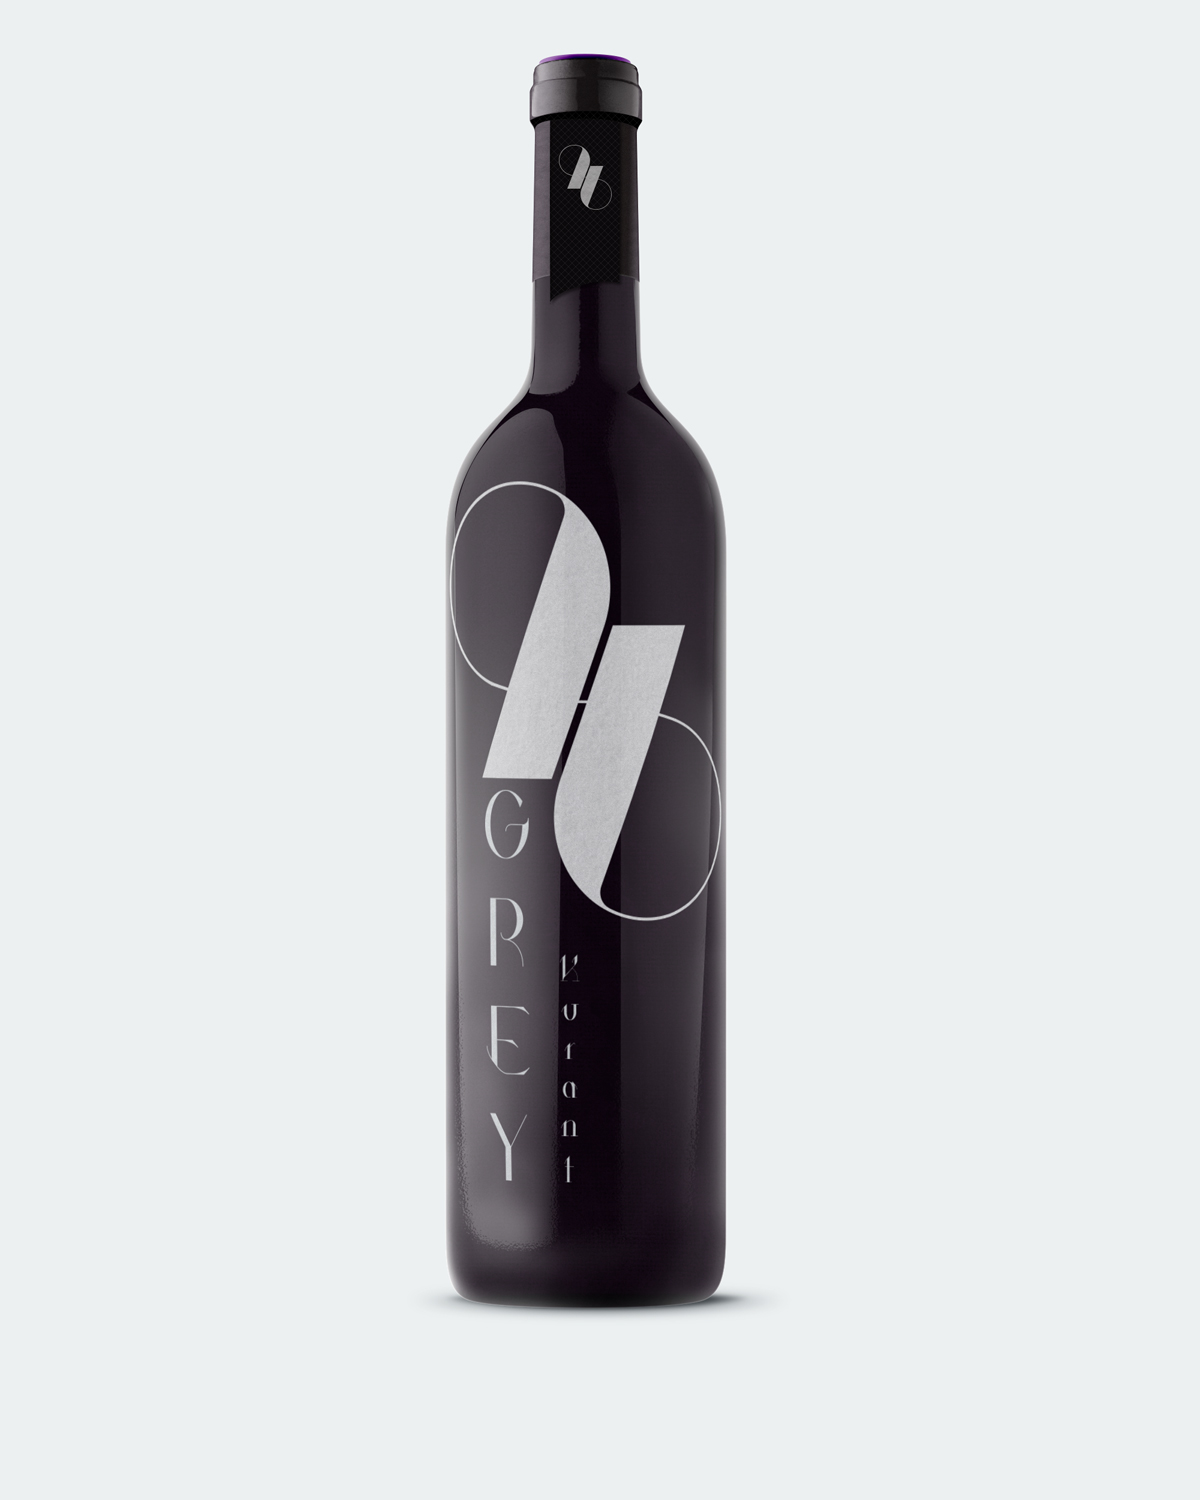 bottle Vodka black Pantone Black C pantone light brand identity